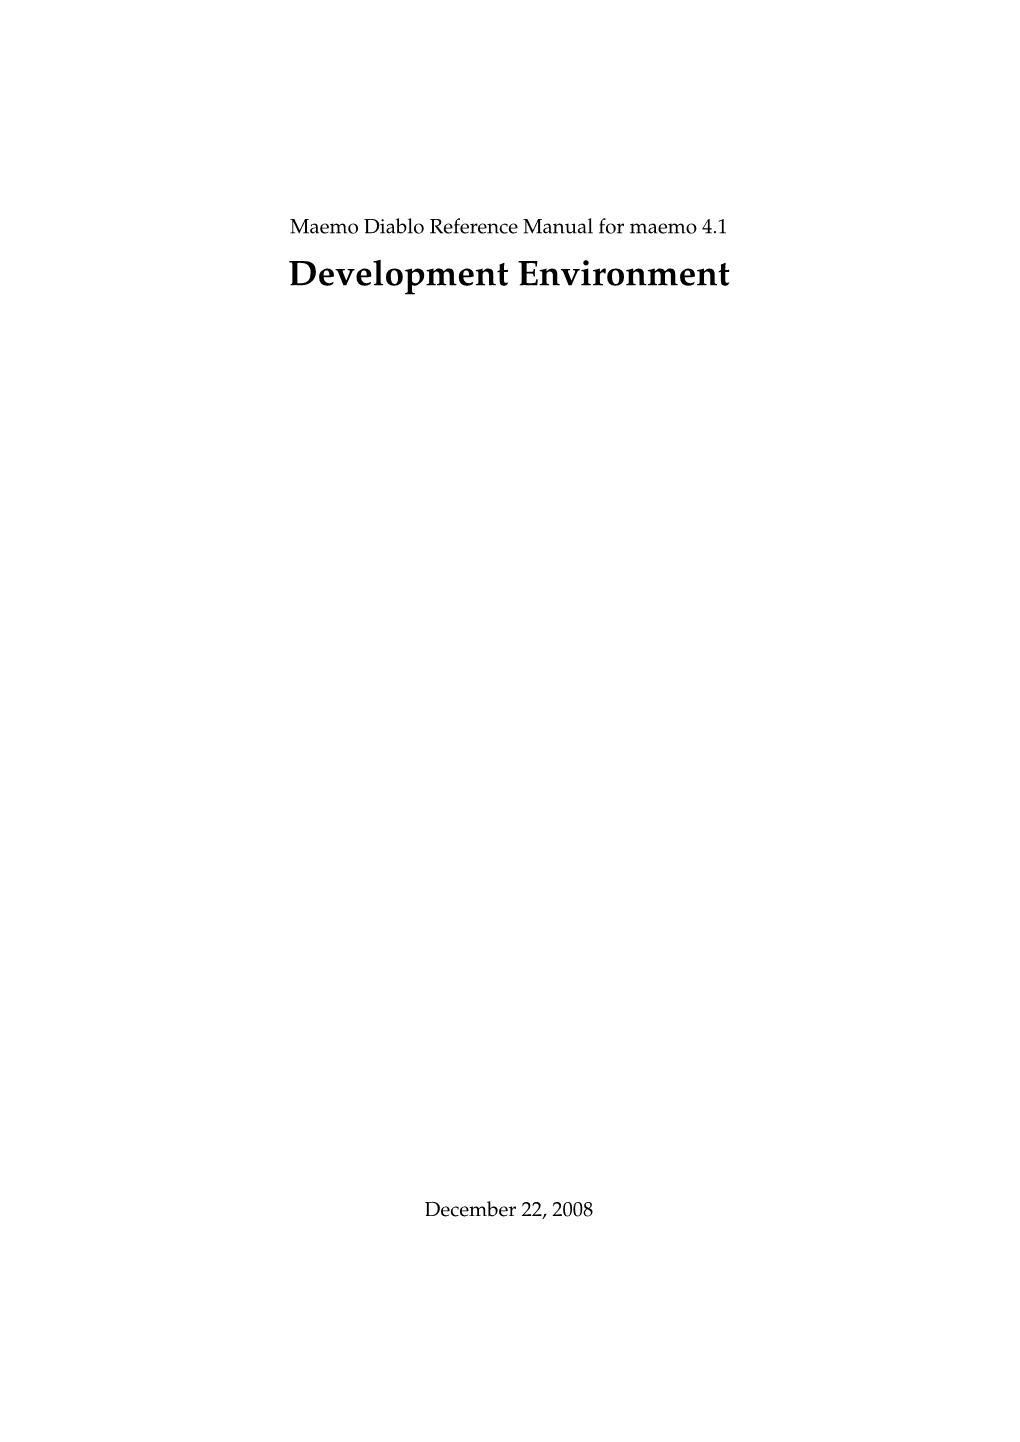 Development Environment